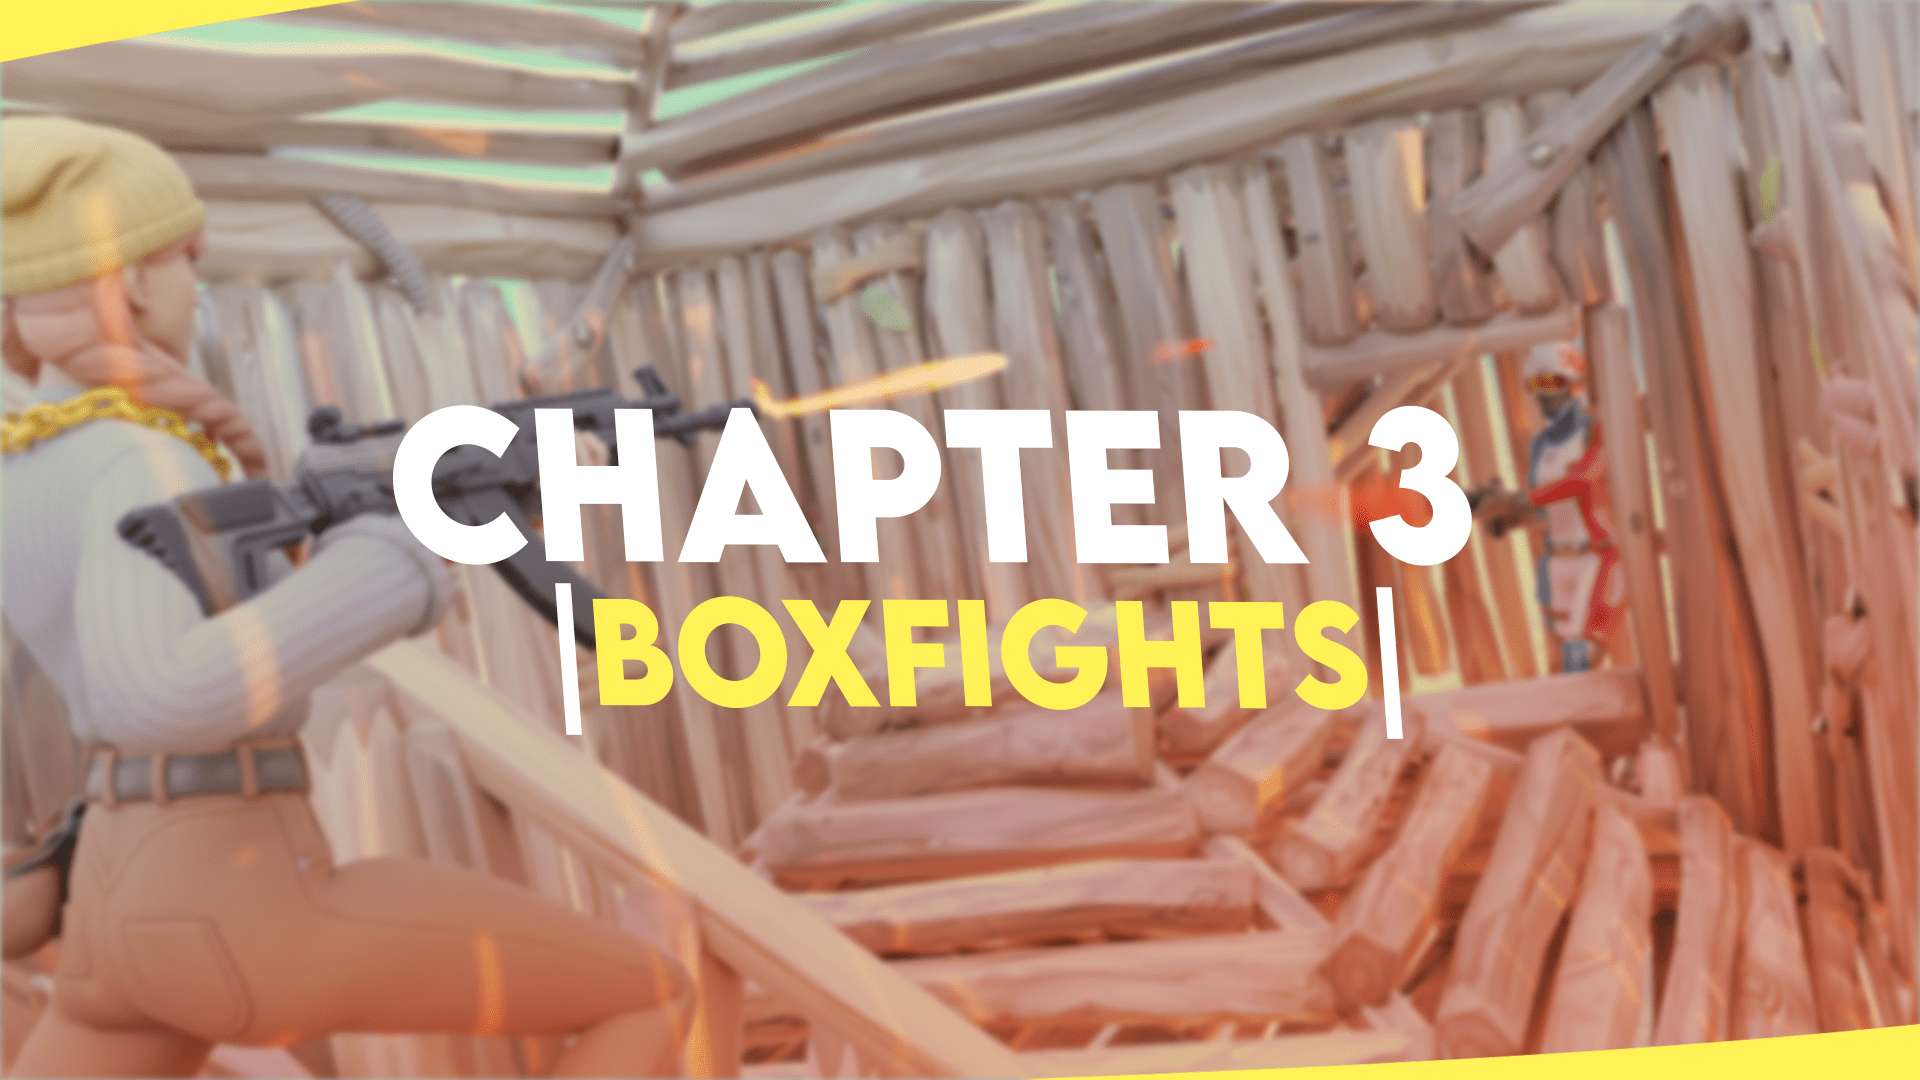 CHAPTER 3 |16 PLAYER| BOXFIGHTS image 3